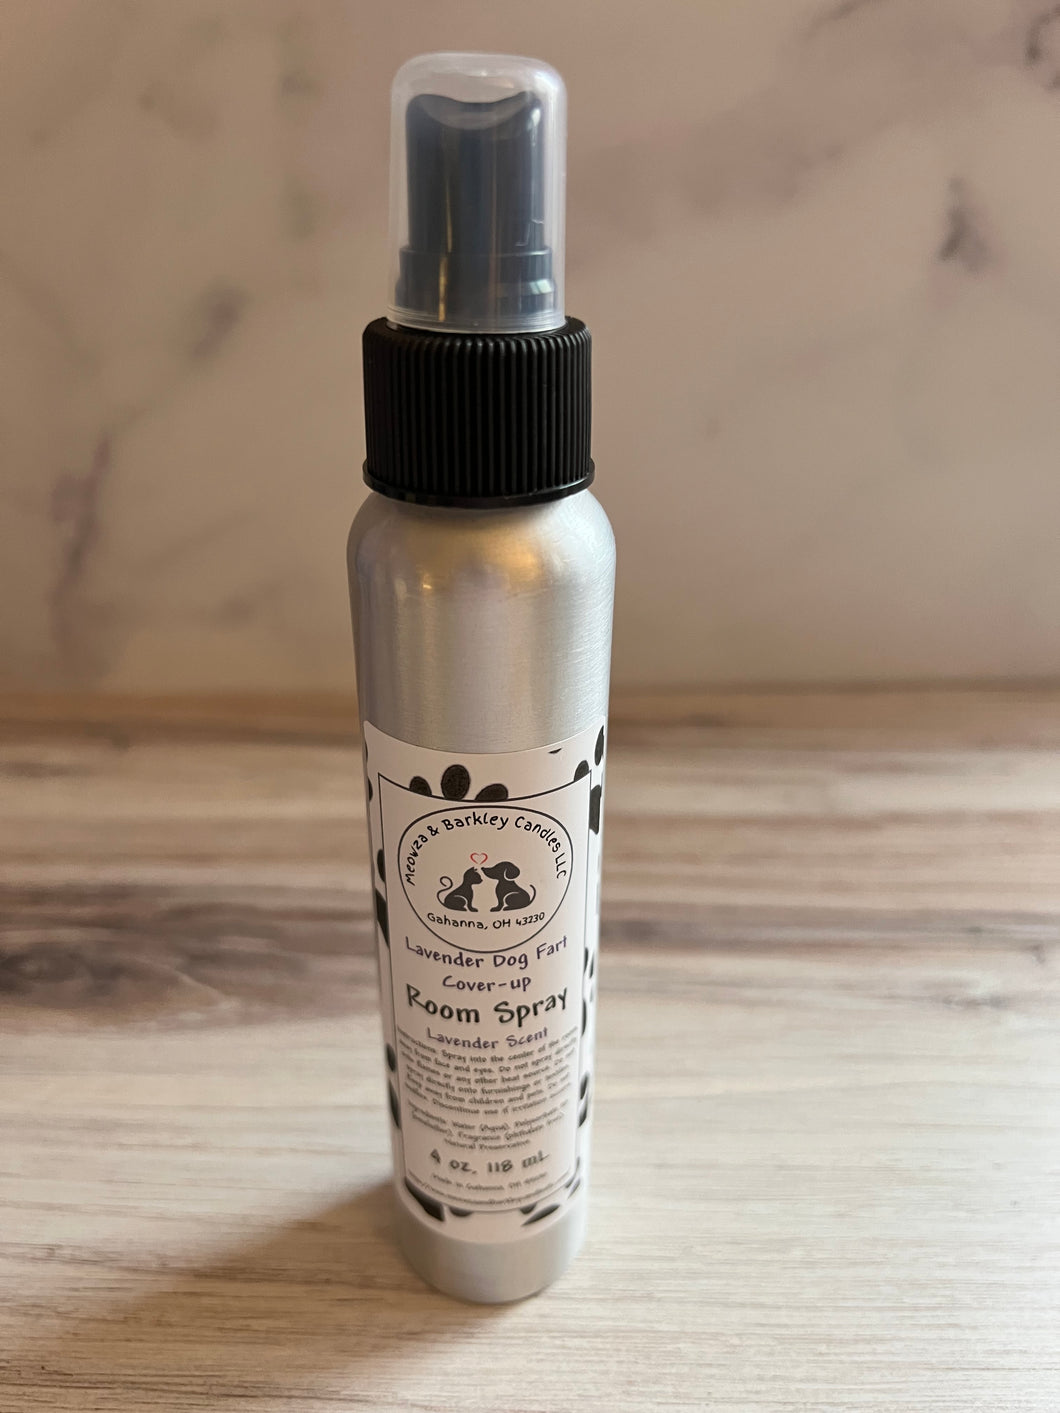 Lavender Dog Fart Cover-up - 4 ounce Room Spray - Lavender Scent